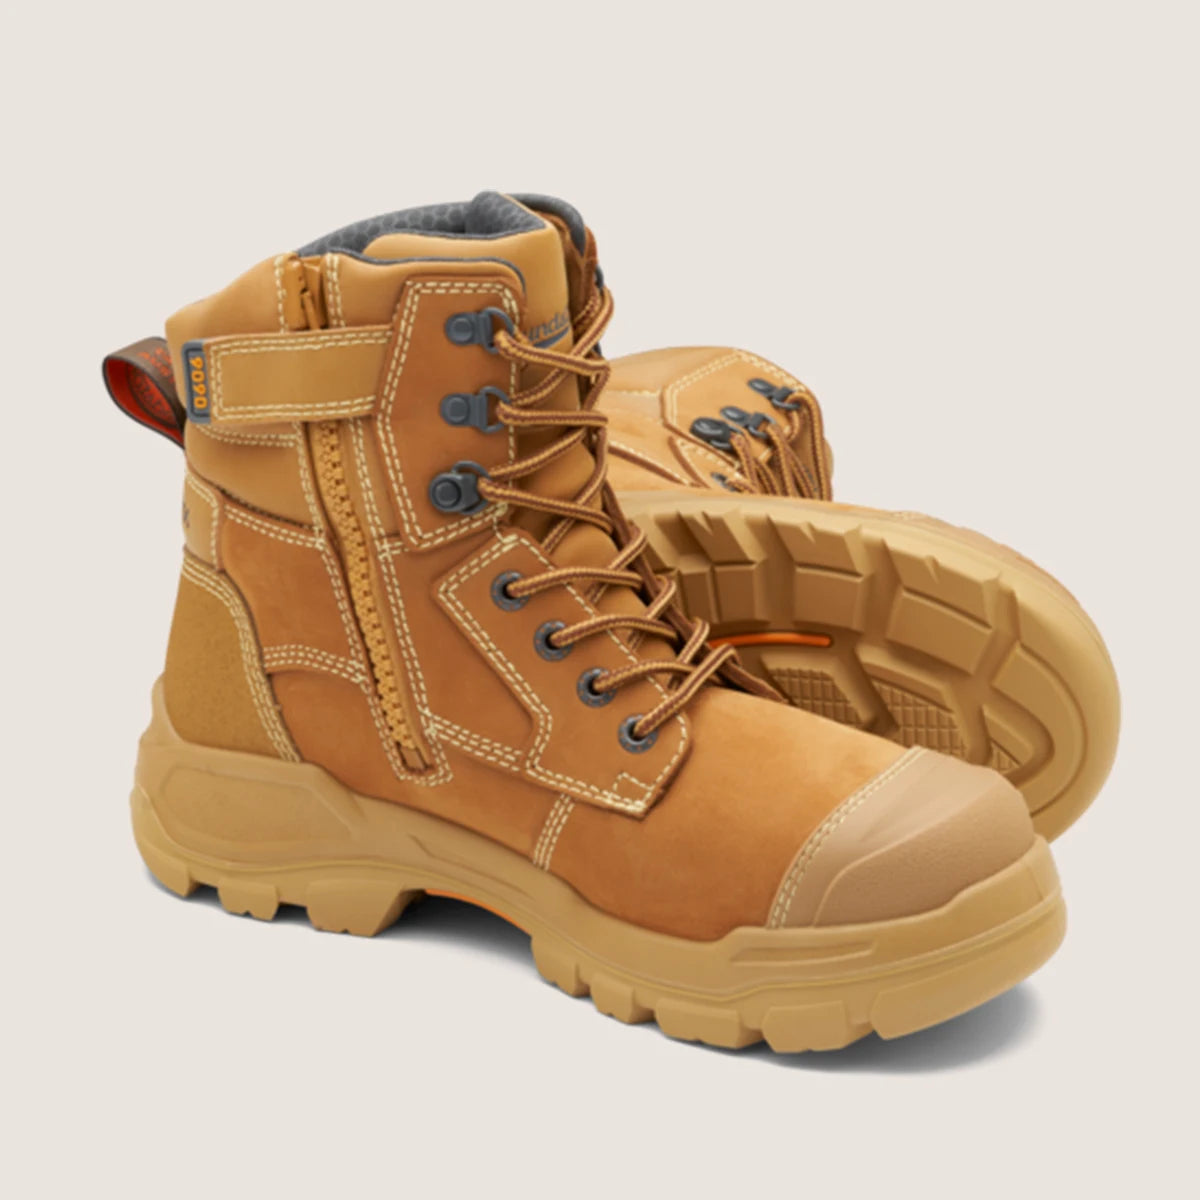 Blundstone 9090 Unisex RotoFlex Safety Boots - Wheat